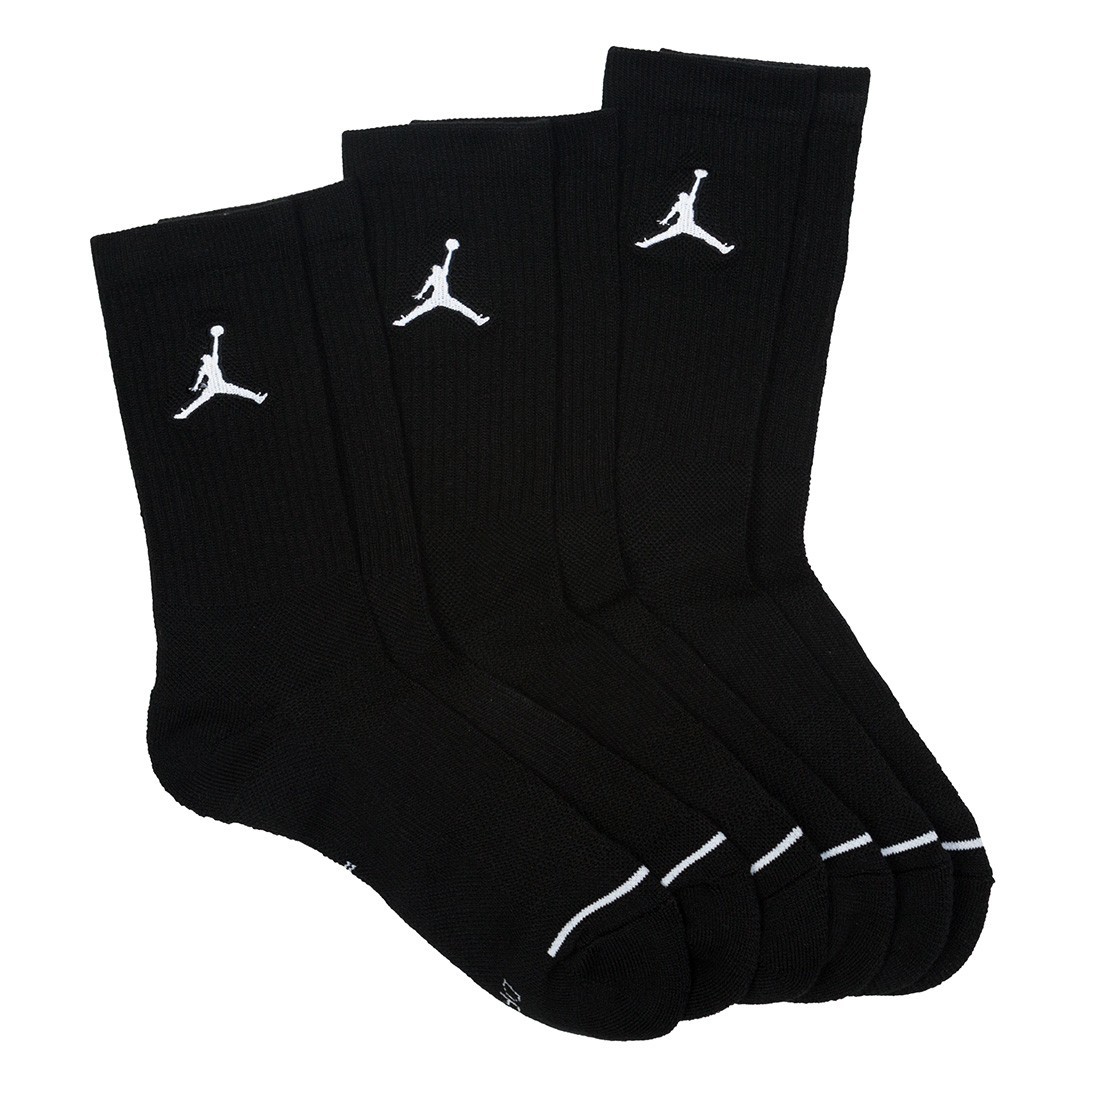 Jordan Socks Nike Black